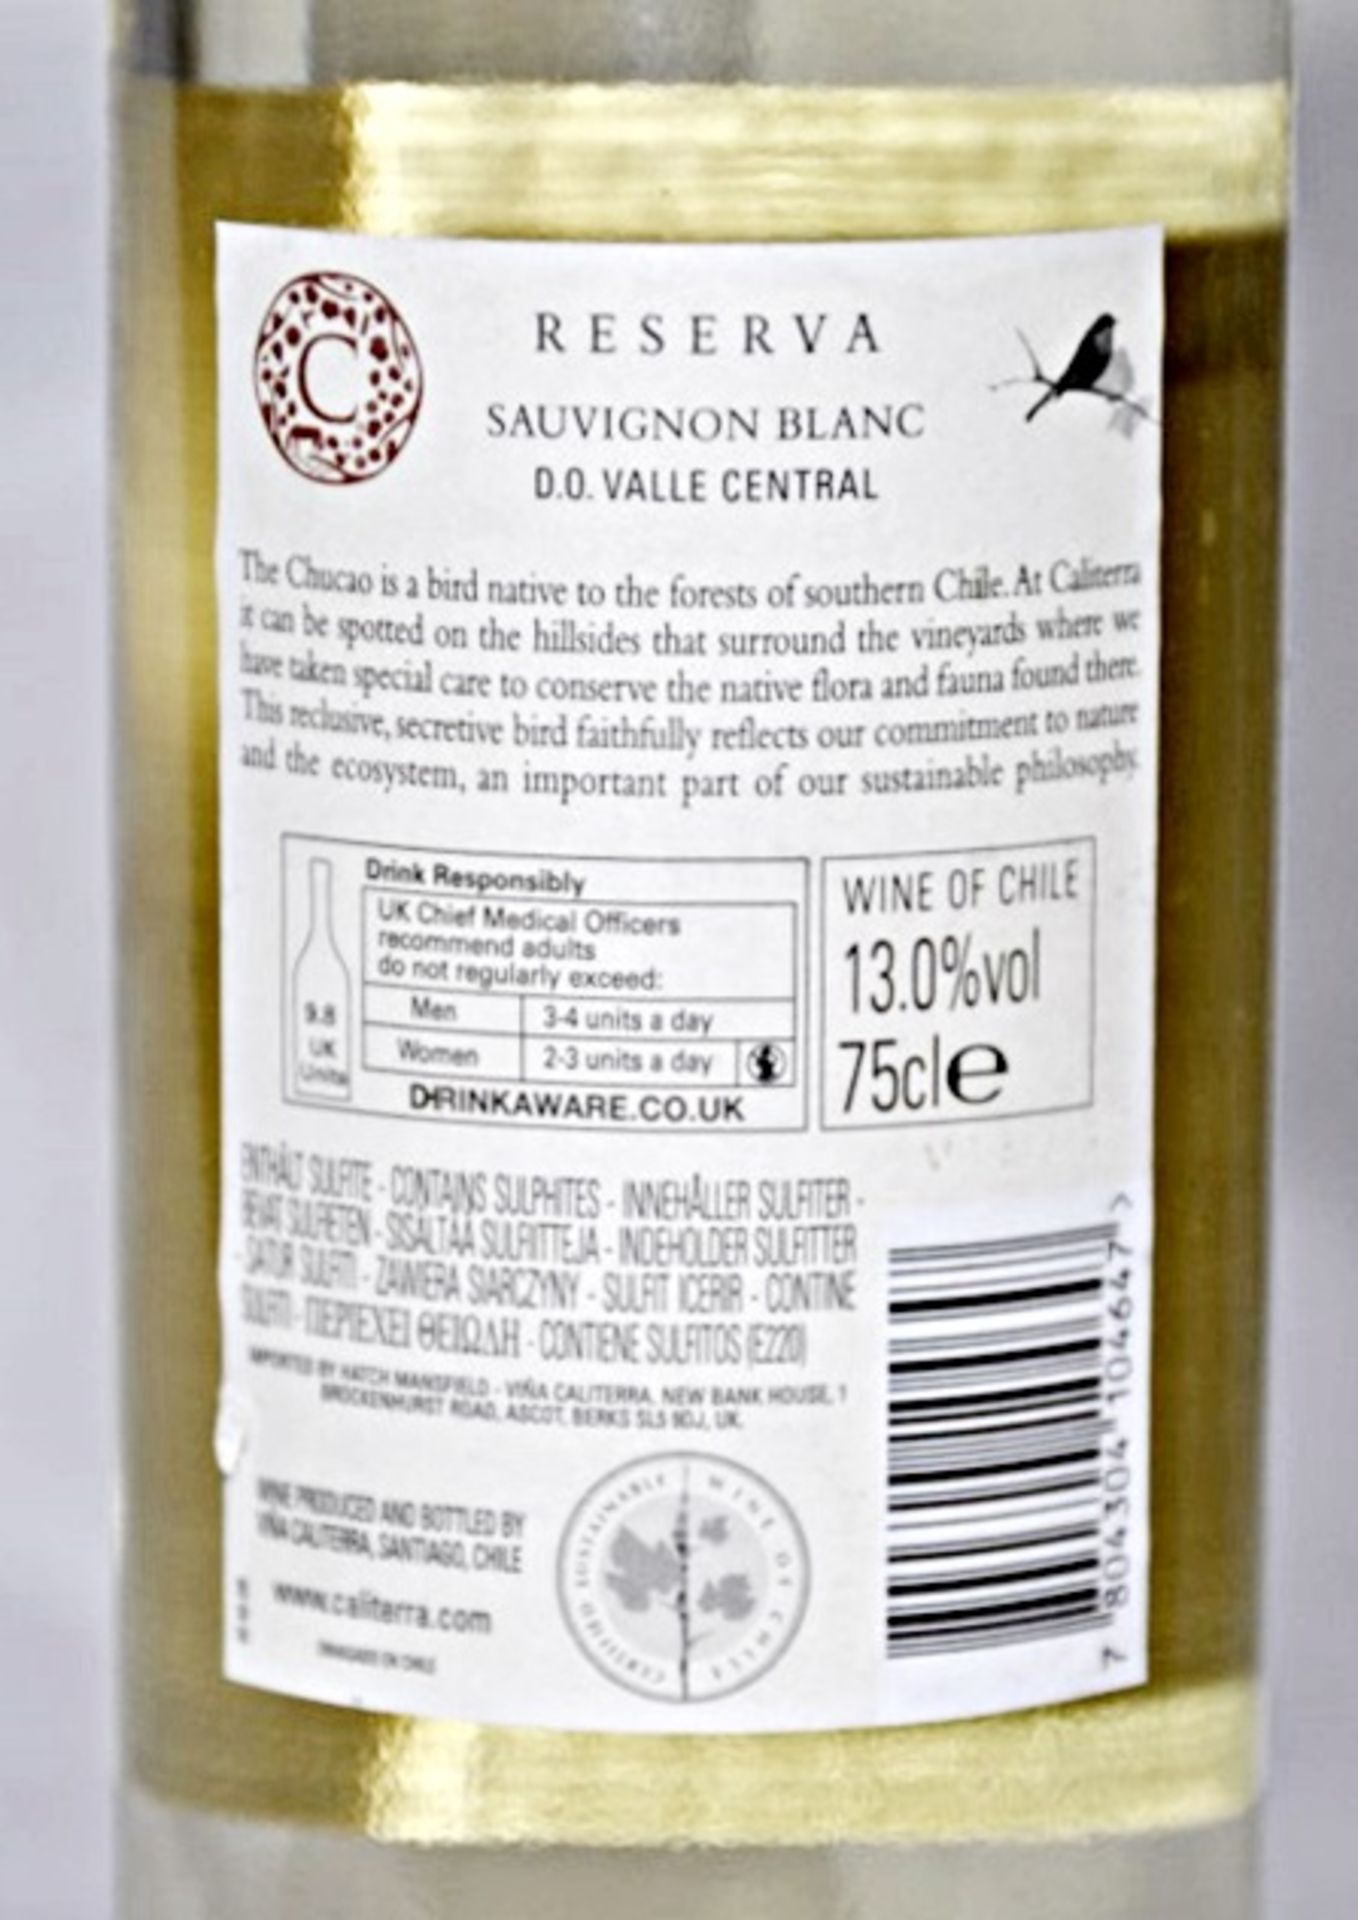 3 x 2013 Caliterra Reserva Sauvignon Blanc, Curico Valley, Chile - 2013 – Bottle Size 75cl - - Image 2 of 3